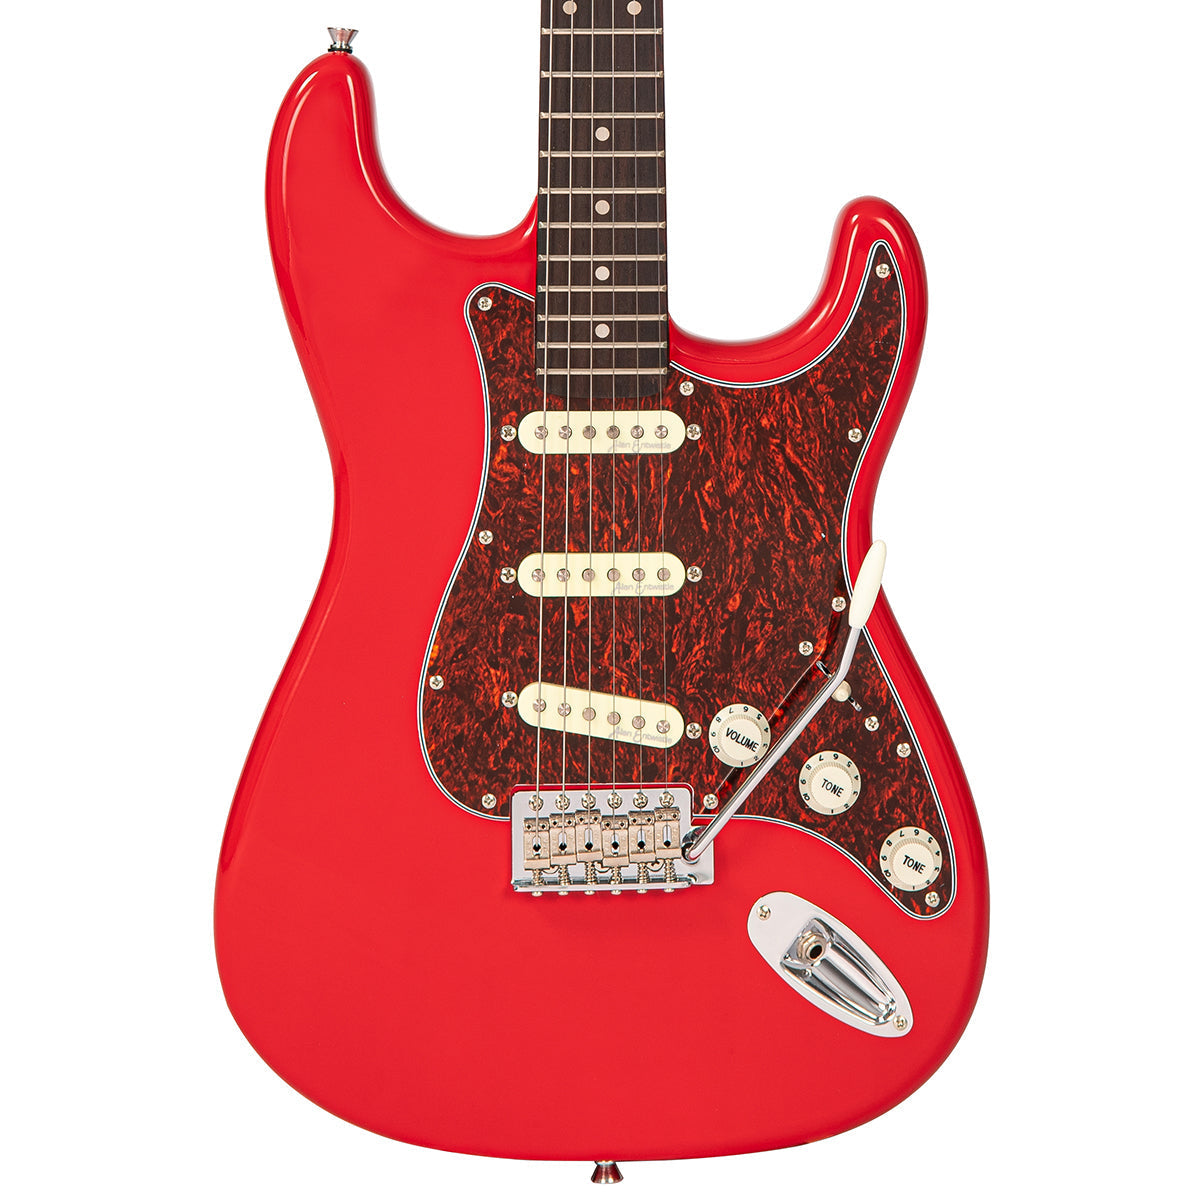 Vintage V60 Coaster Series Electric Guitar ~ Gloss Red, Electric Guitar for sale at Richards Guitars.